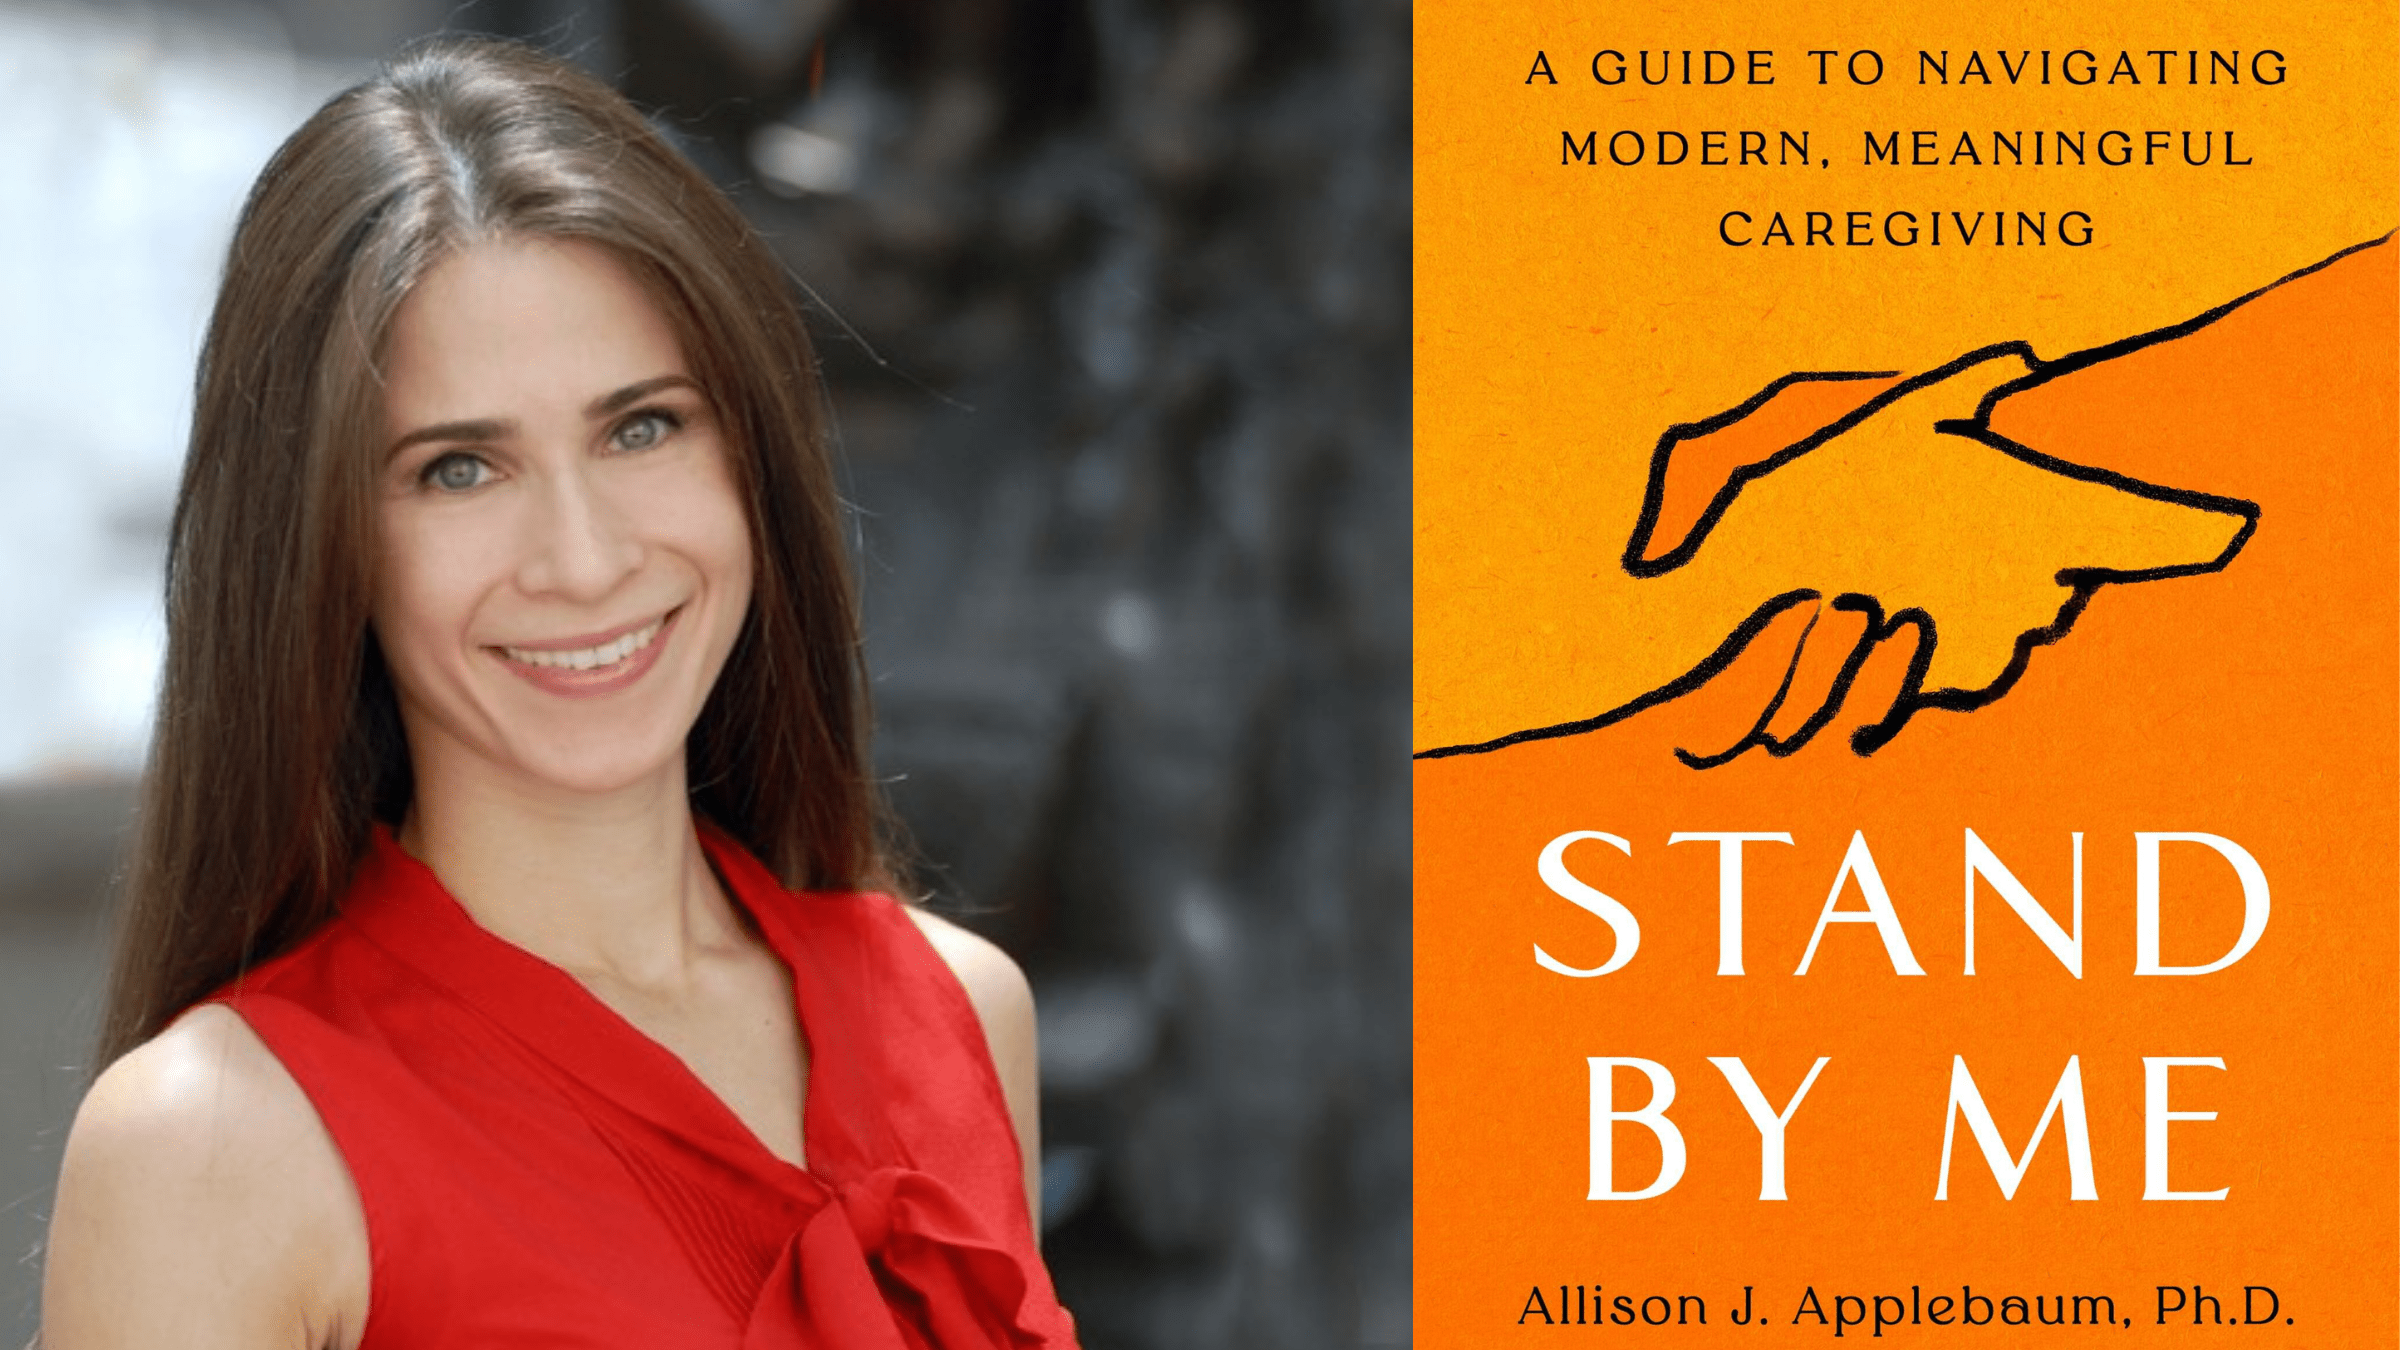 Dr. Allison Applebaum and book